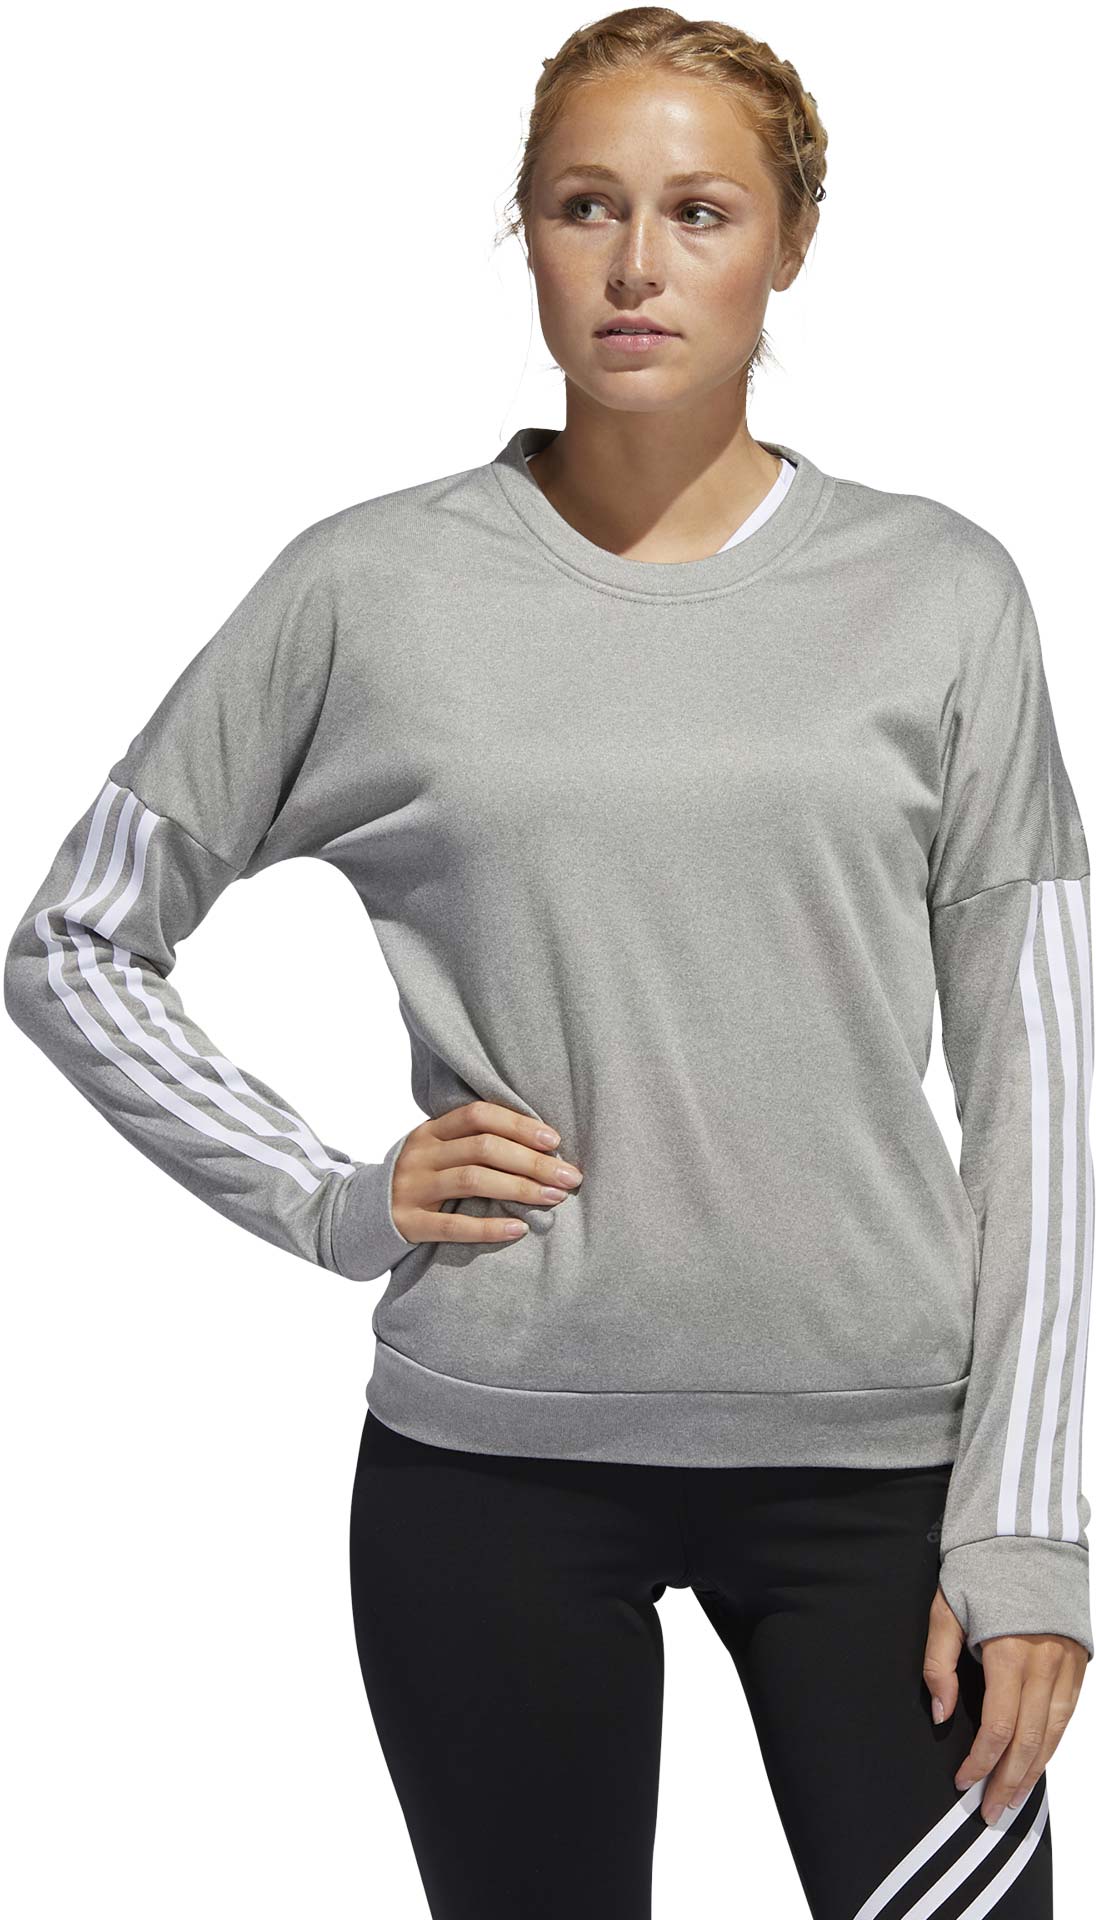 Women's long sleeve sweatshirt